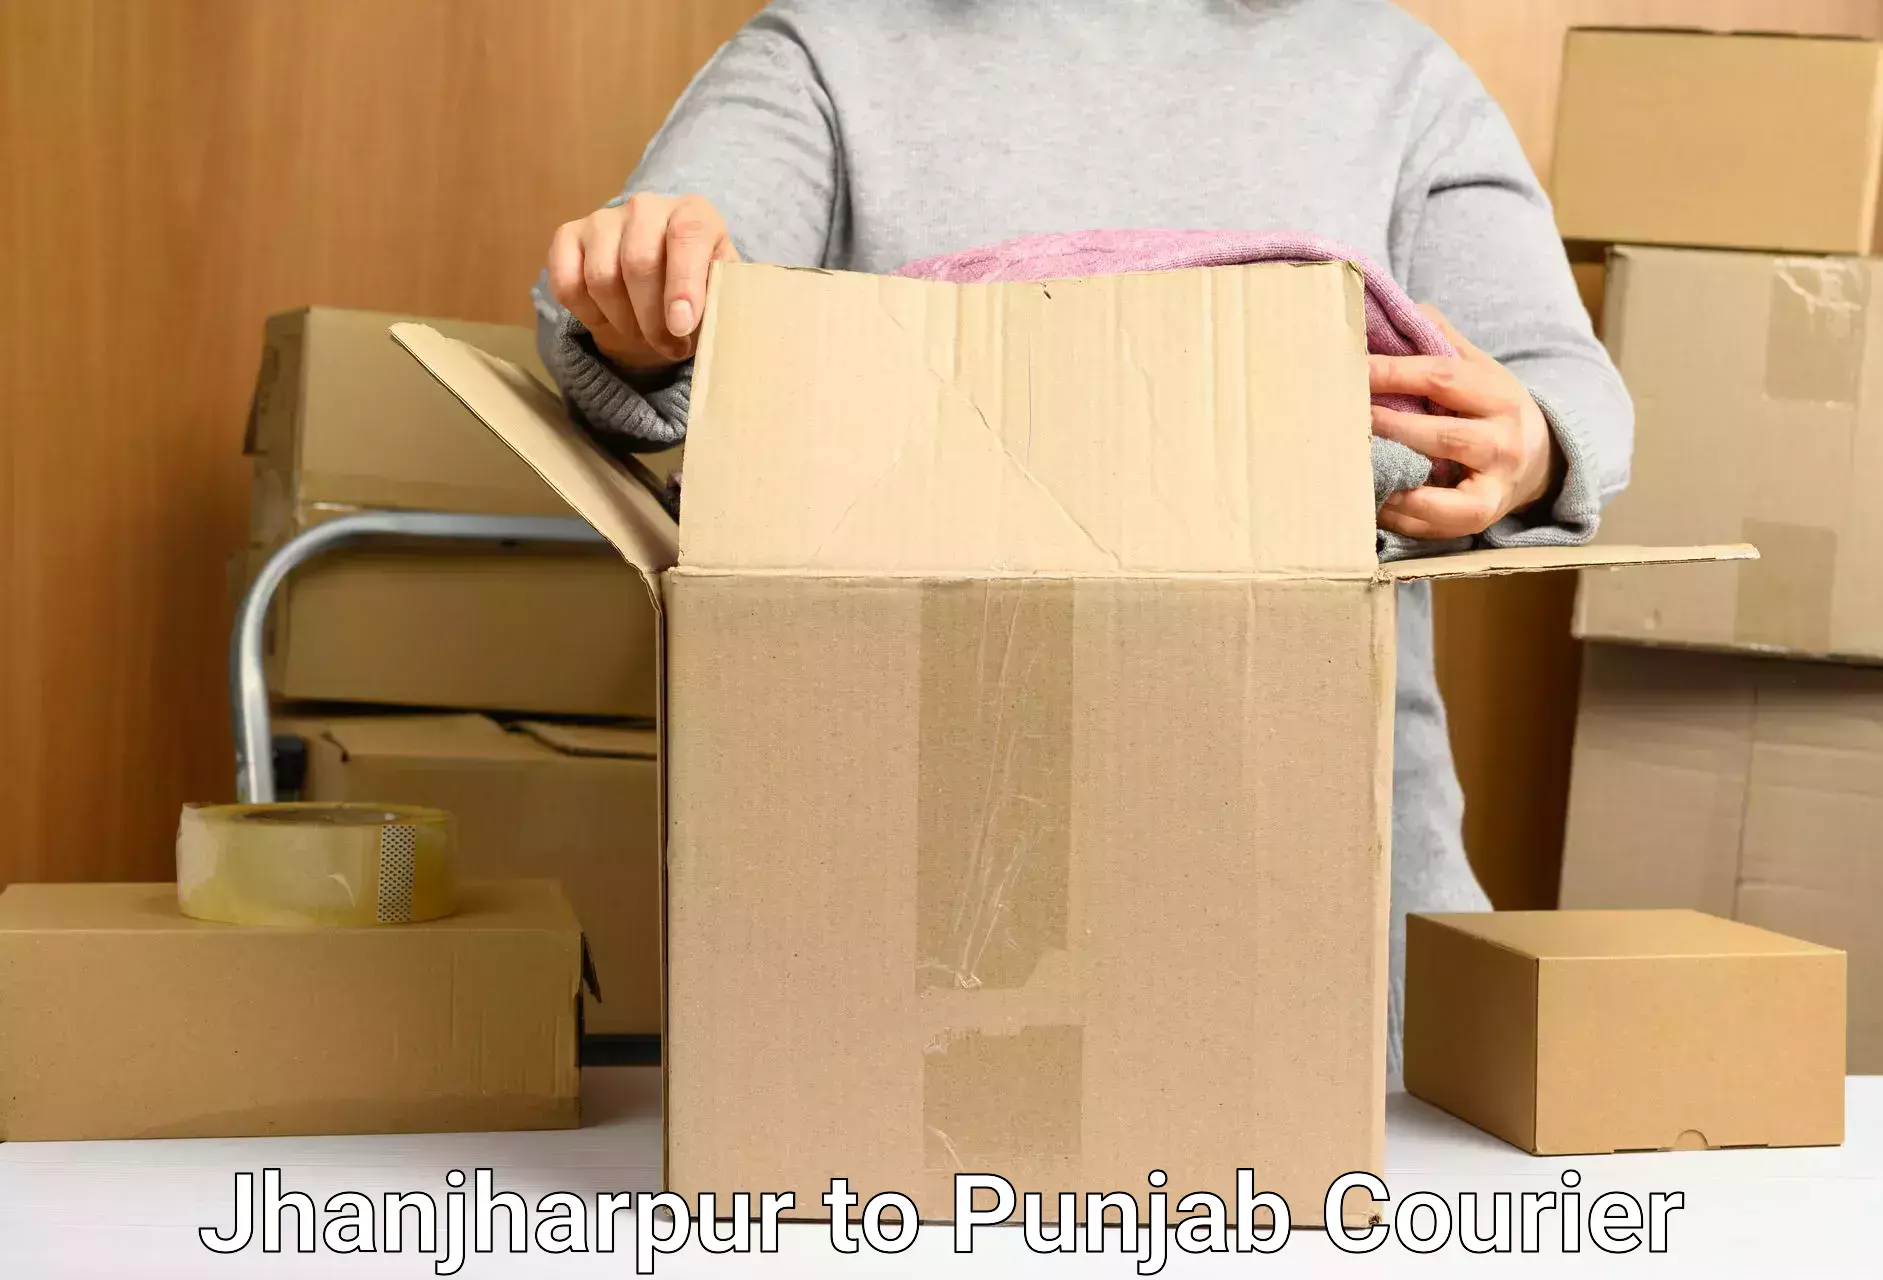 Heavy parcel delivery in Jhanjharpur to Patiala